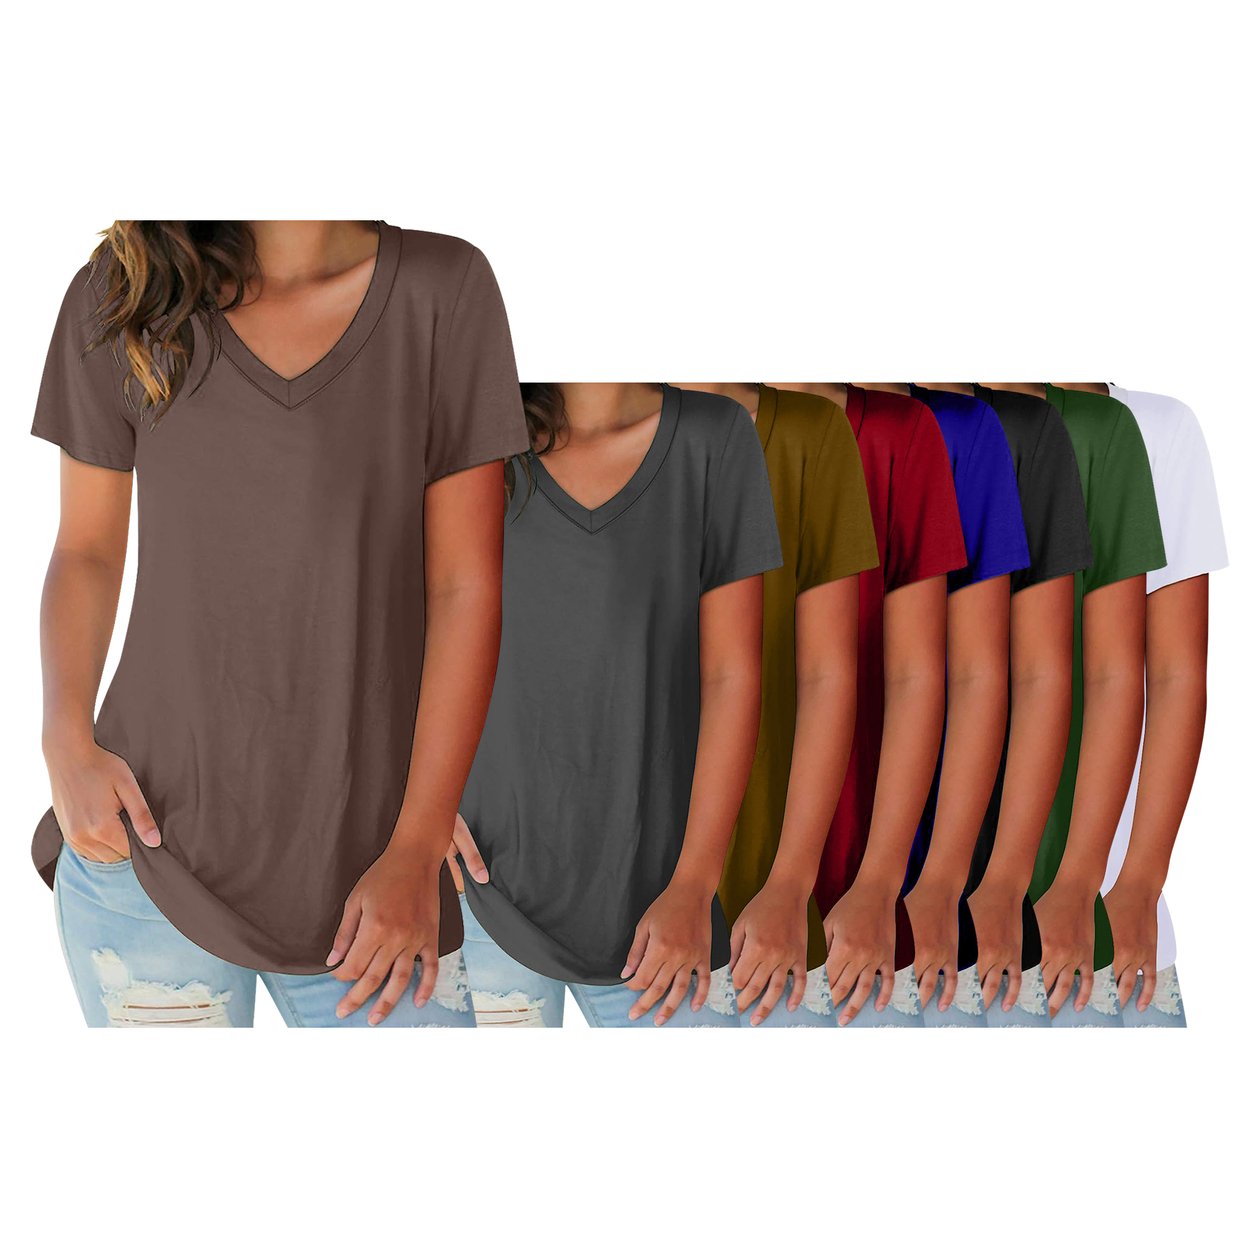 3-Pack: Women's Ultra Soft Smooth Cotton Blend Basic V-Neck Short Sleeve Shirts - Black Grey, Red, Large